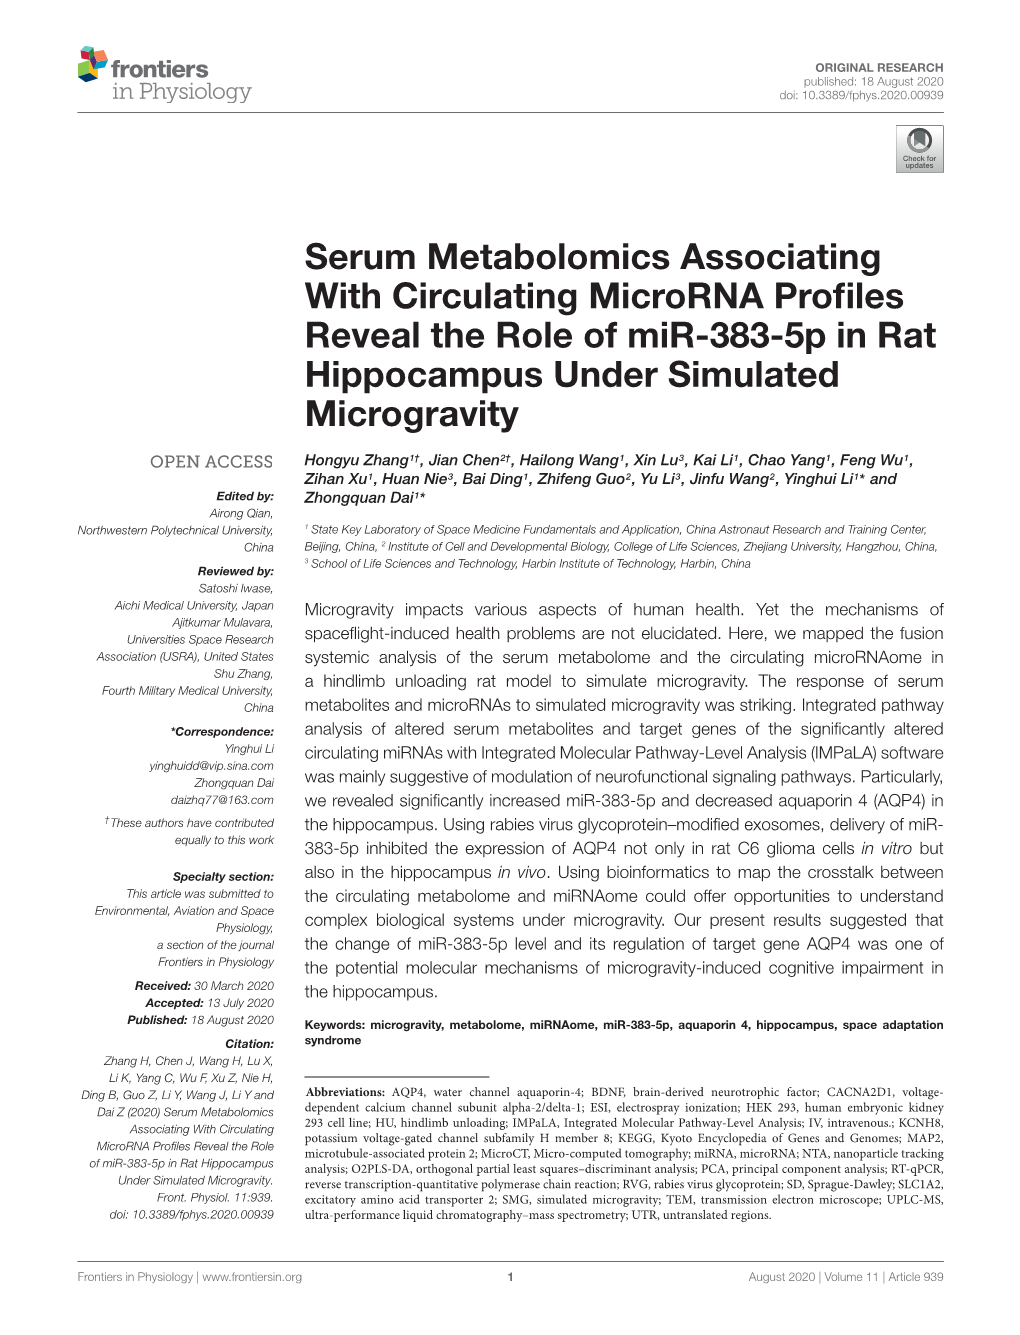 Serum Metabolomics Associating with Circulating Microrna Profiles